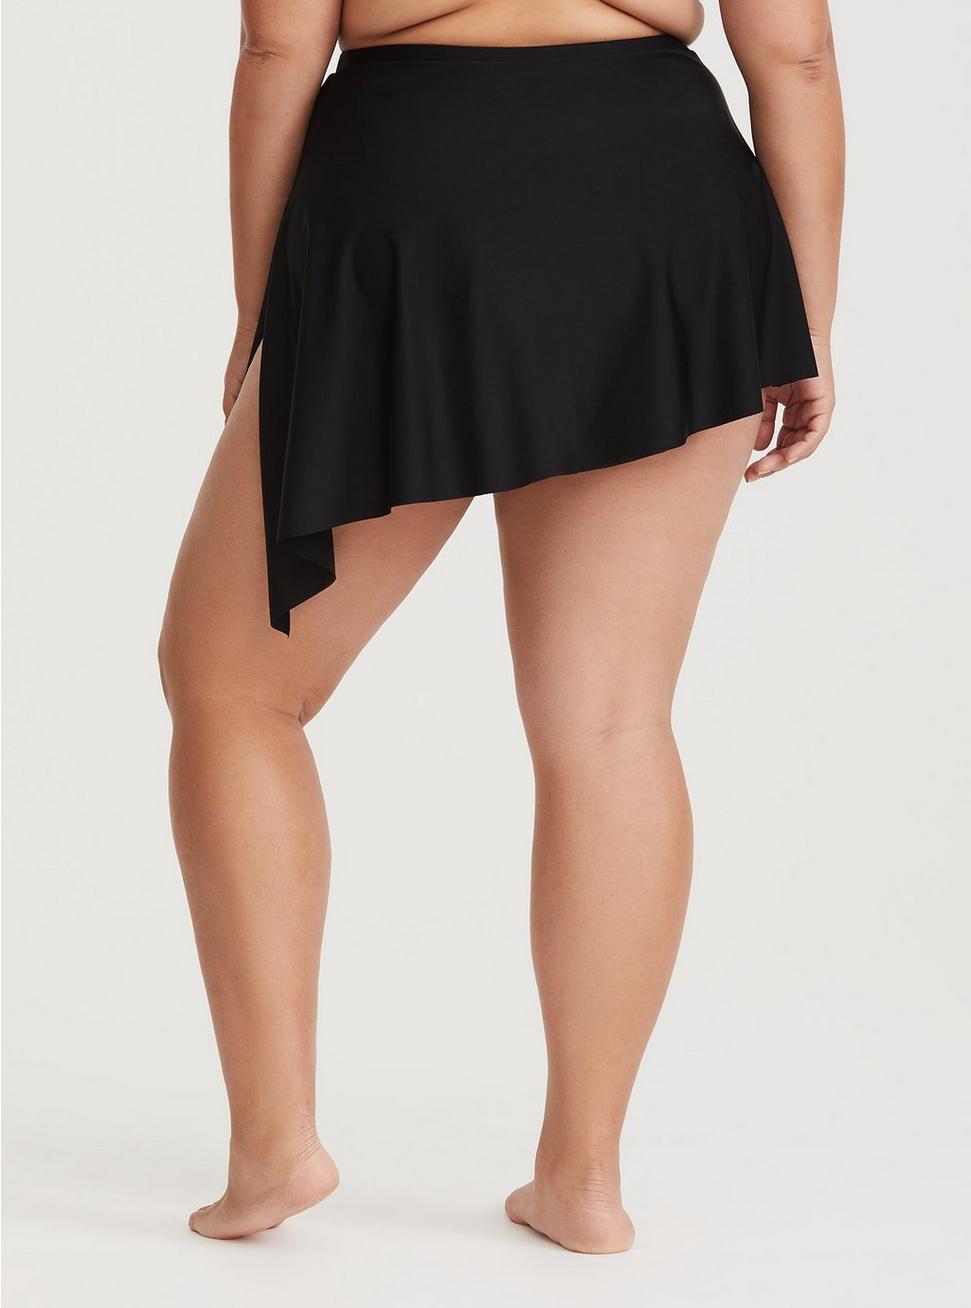 High Rise Mid Length Side Tie Swim Skirt With Brief, DEEP BLACK, alternate